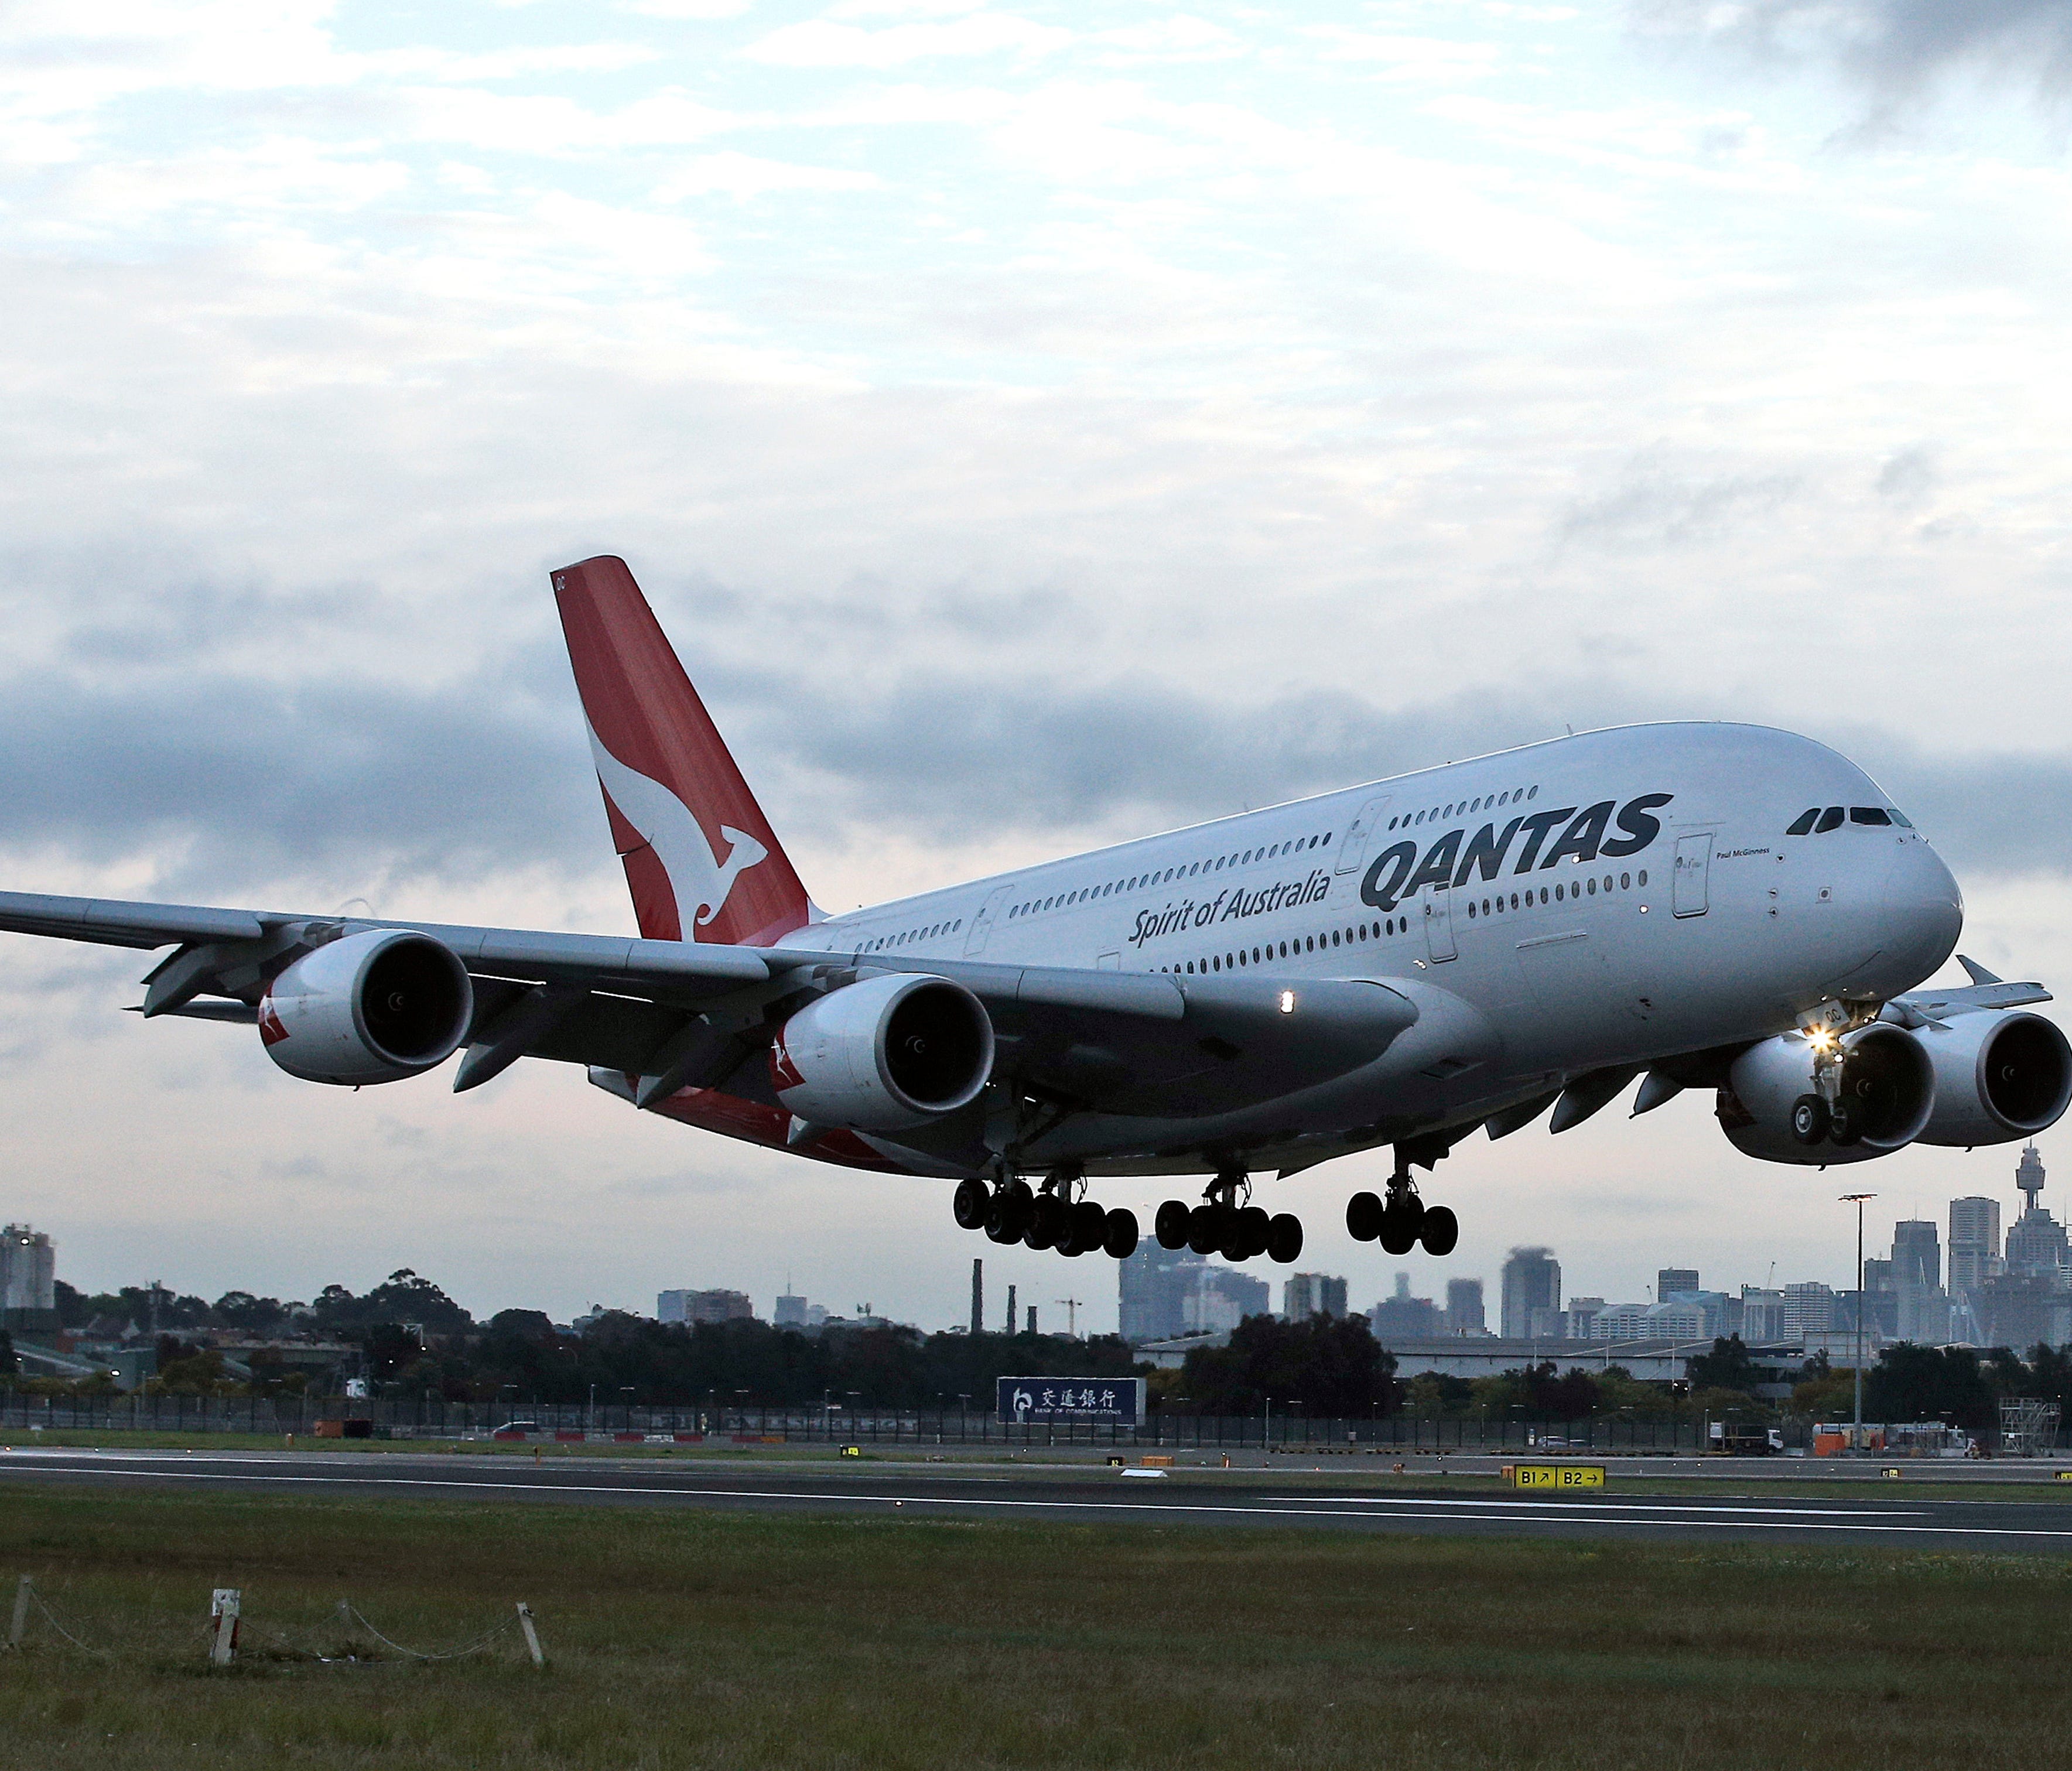 A Qantas A380 lands at Sydney International Airport on Sept. 13, 2016.